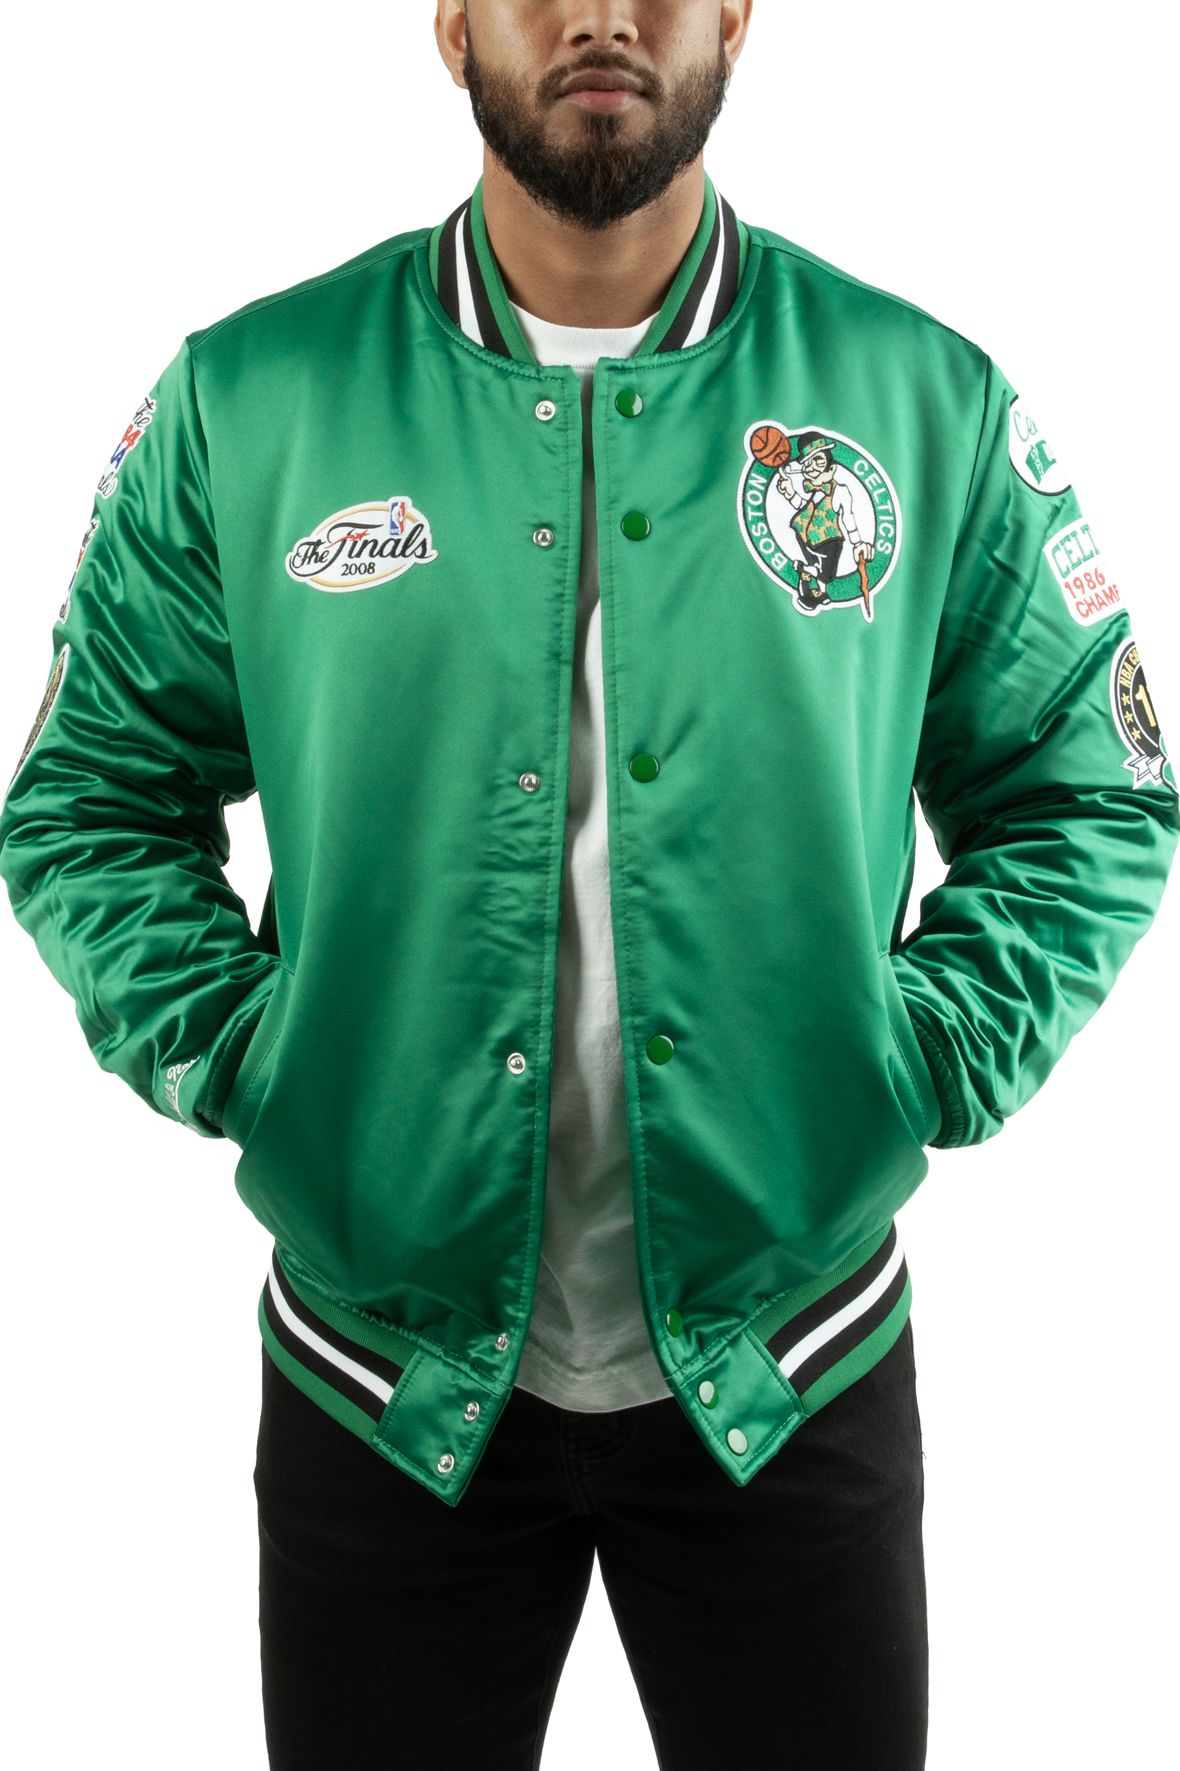 Boston Celtics Jacket Boys Large Youth Green NBA Basketball